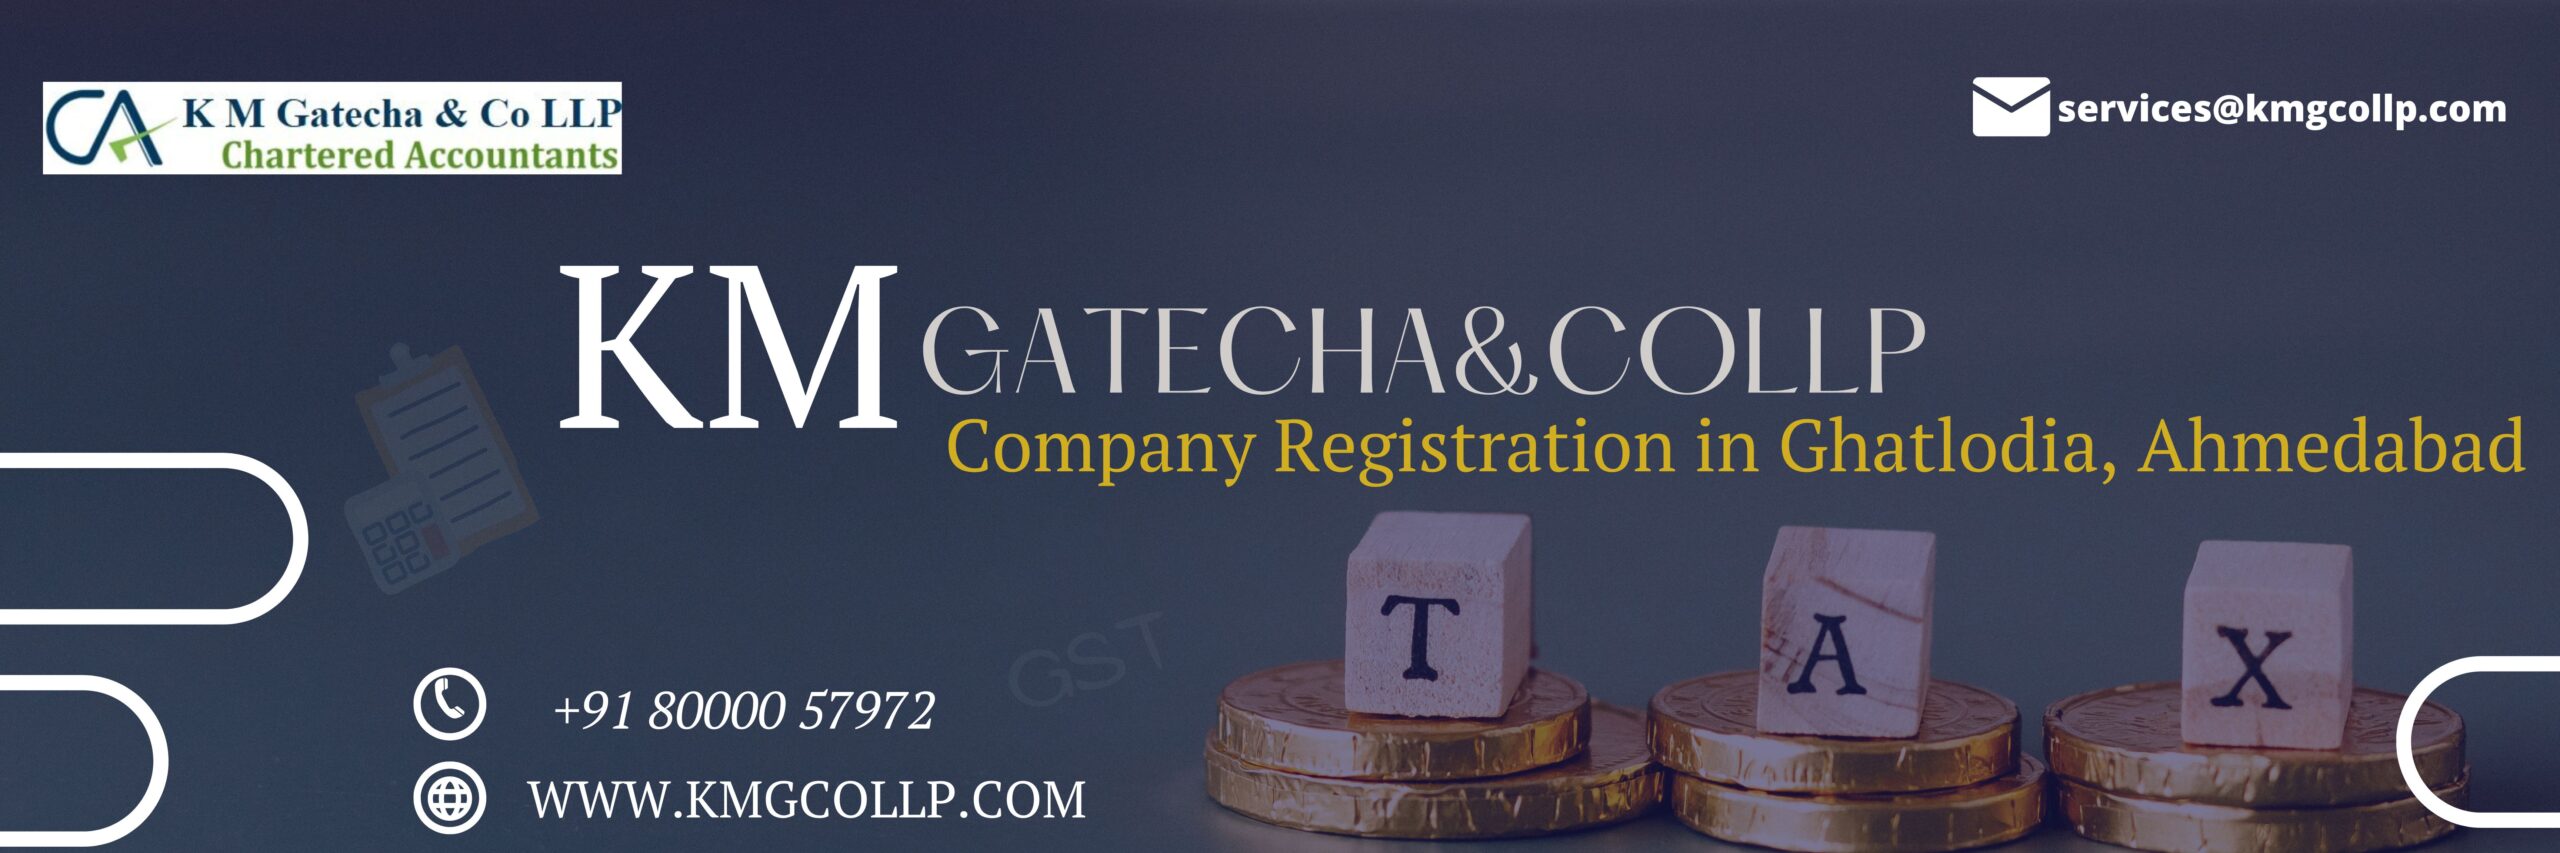 Company Registration in Ghatlodia, Ahmedabad